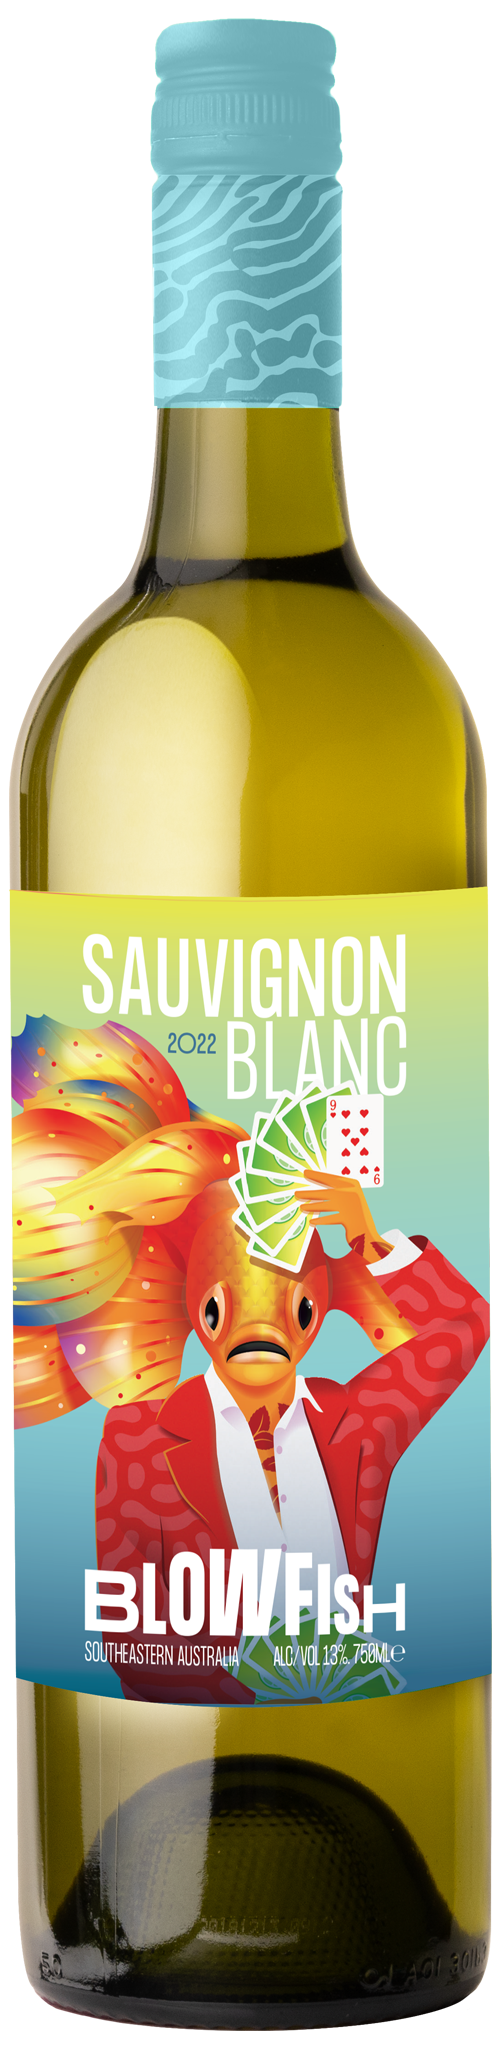 Blowfish Sauvignon Blanc 2022